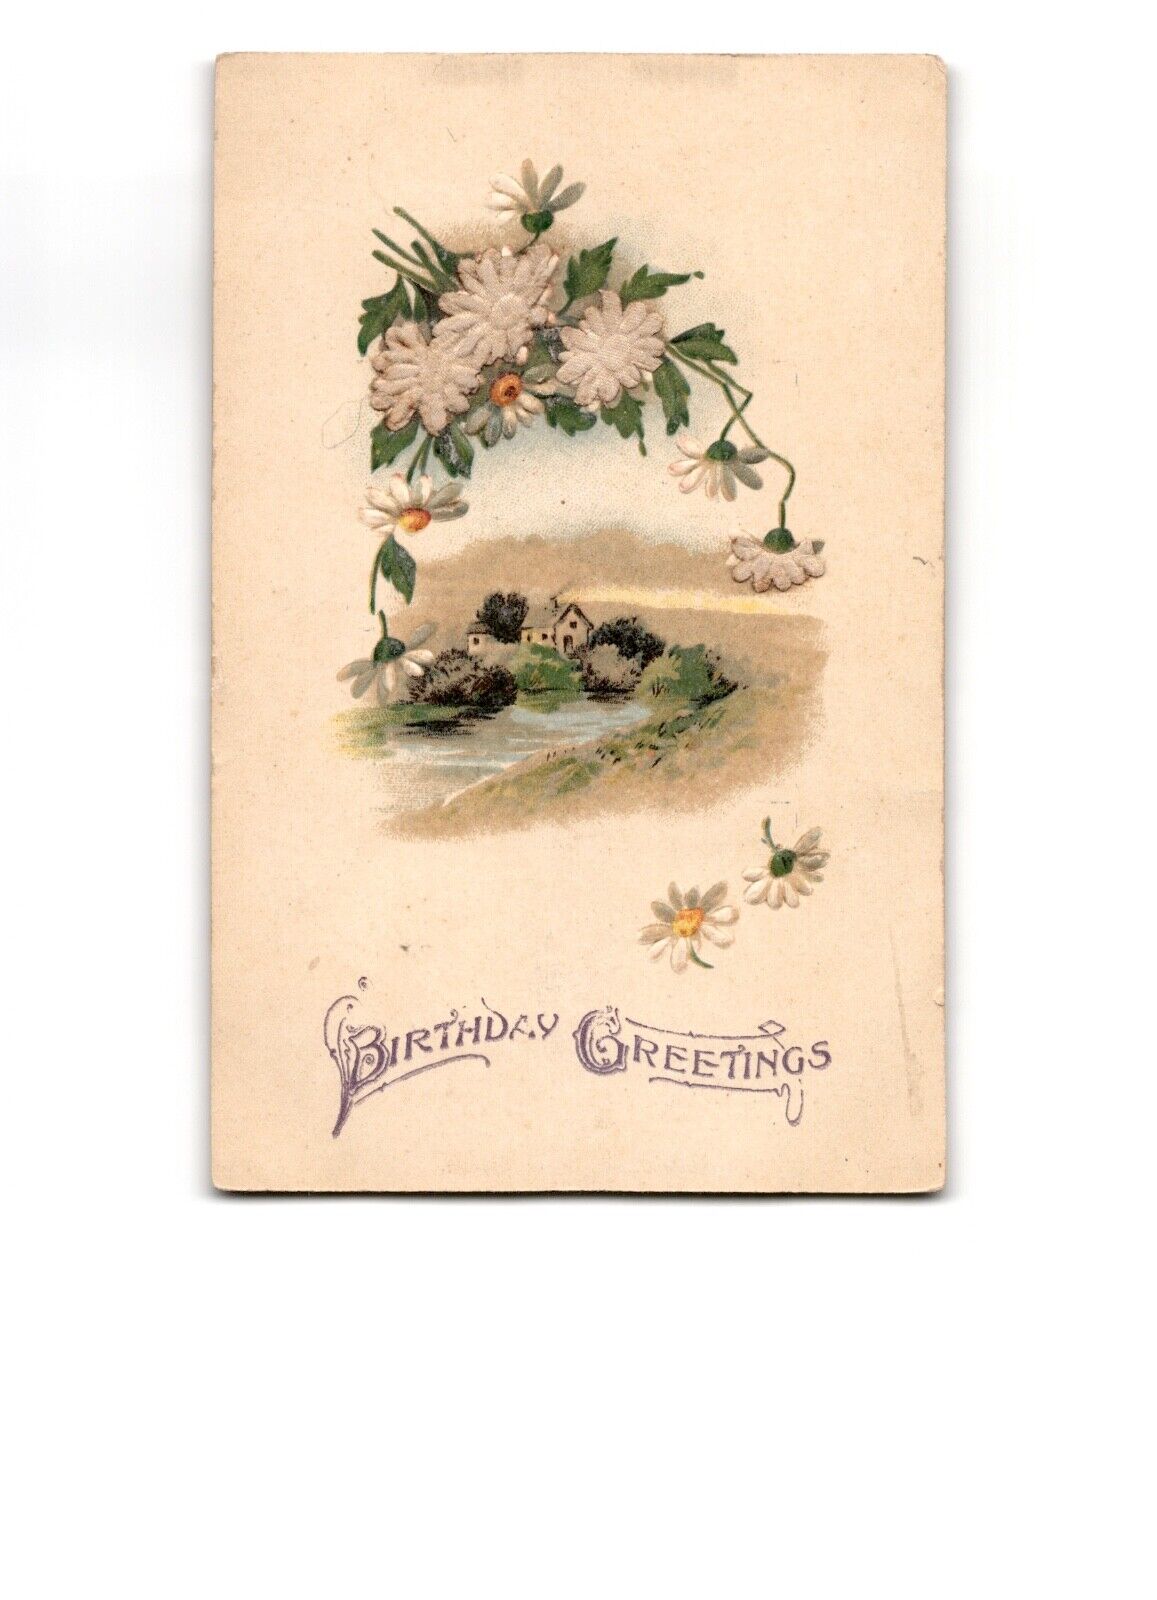 Antique Birthday Greetings Postcard - Vintage Floral Pastoral Scene